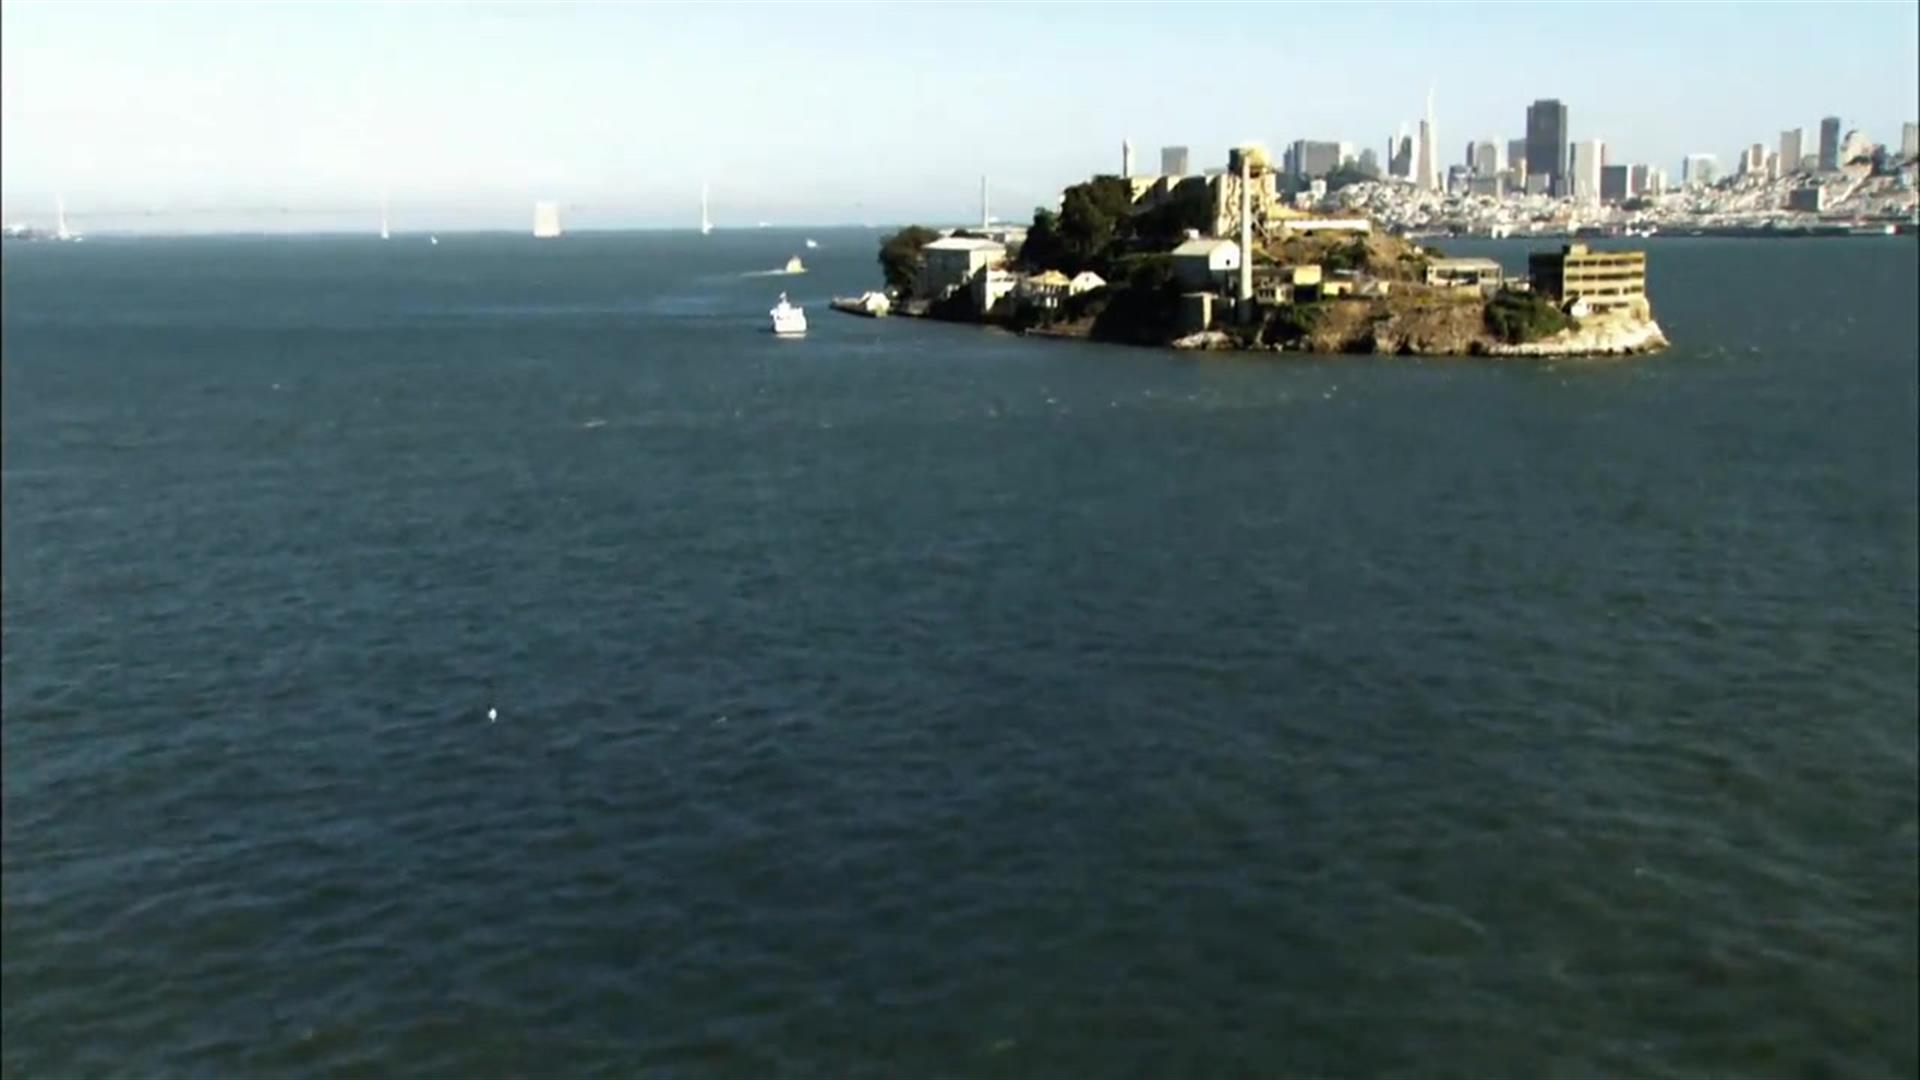 The story behind the Alcatraz escape, history's most daring prison break